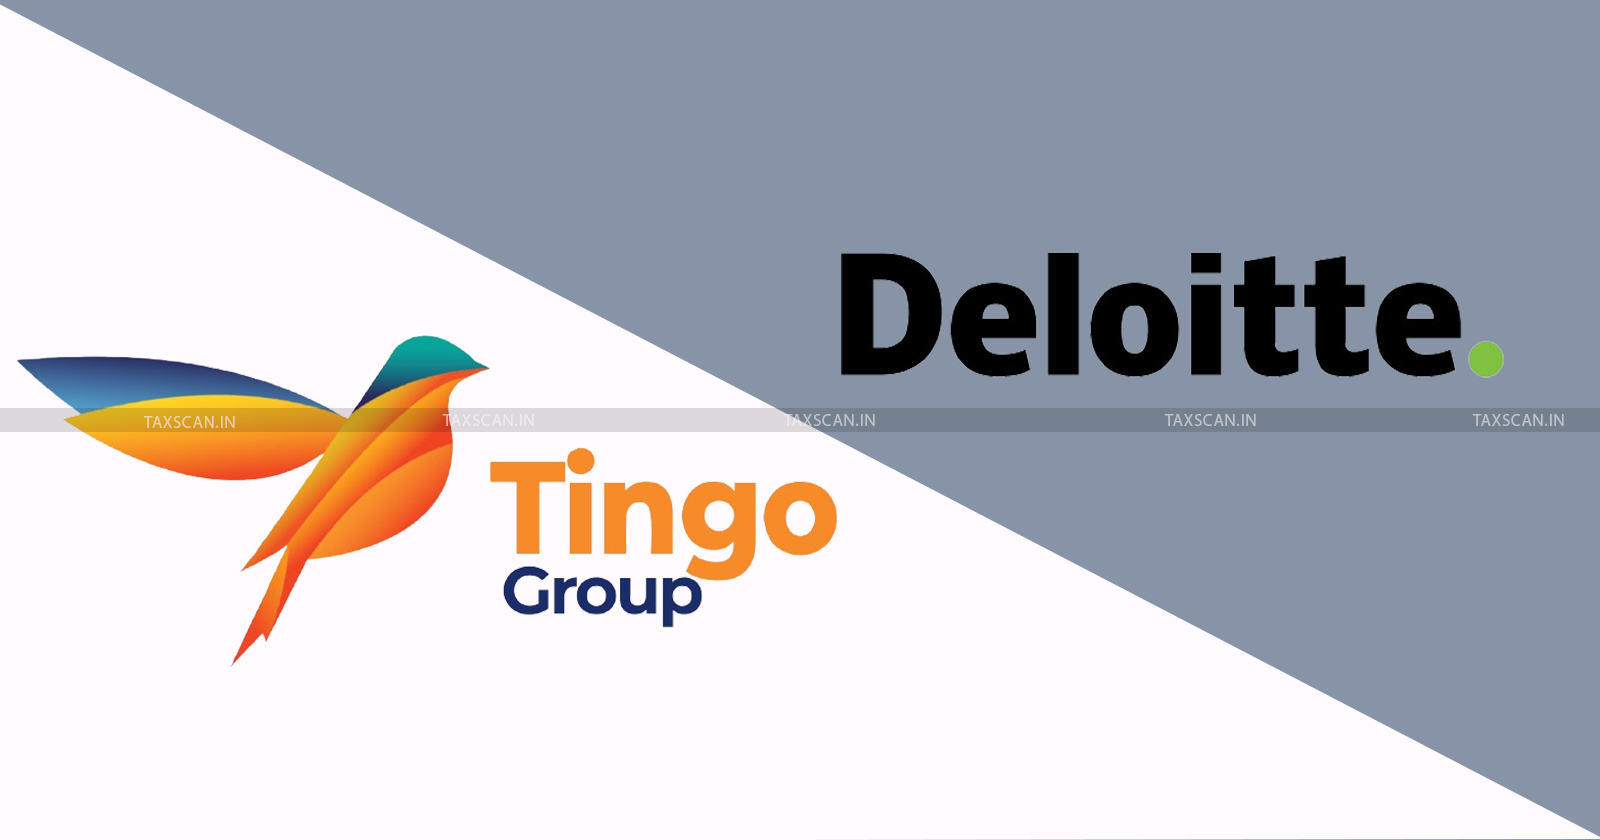 deloittte - tingo group - Deloitte and Tingo Group controversy - Tingo group deloitte - Financial fraud in Nigeria - Taxscan